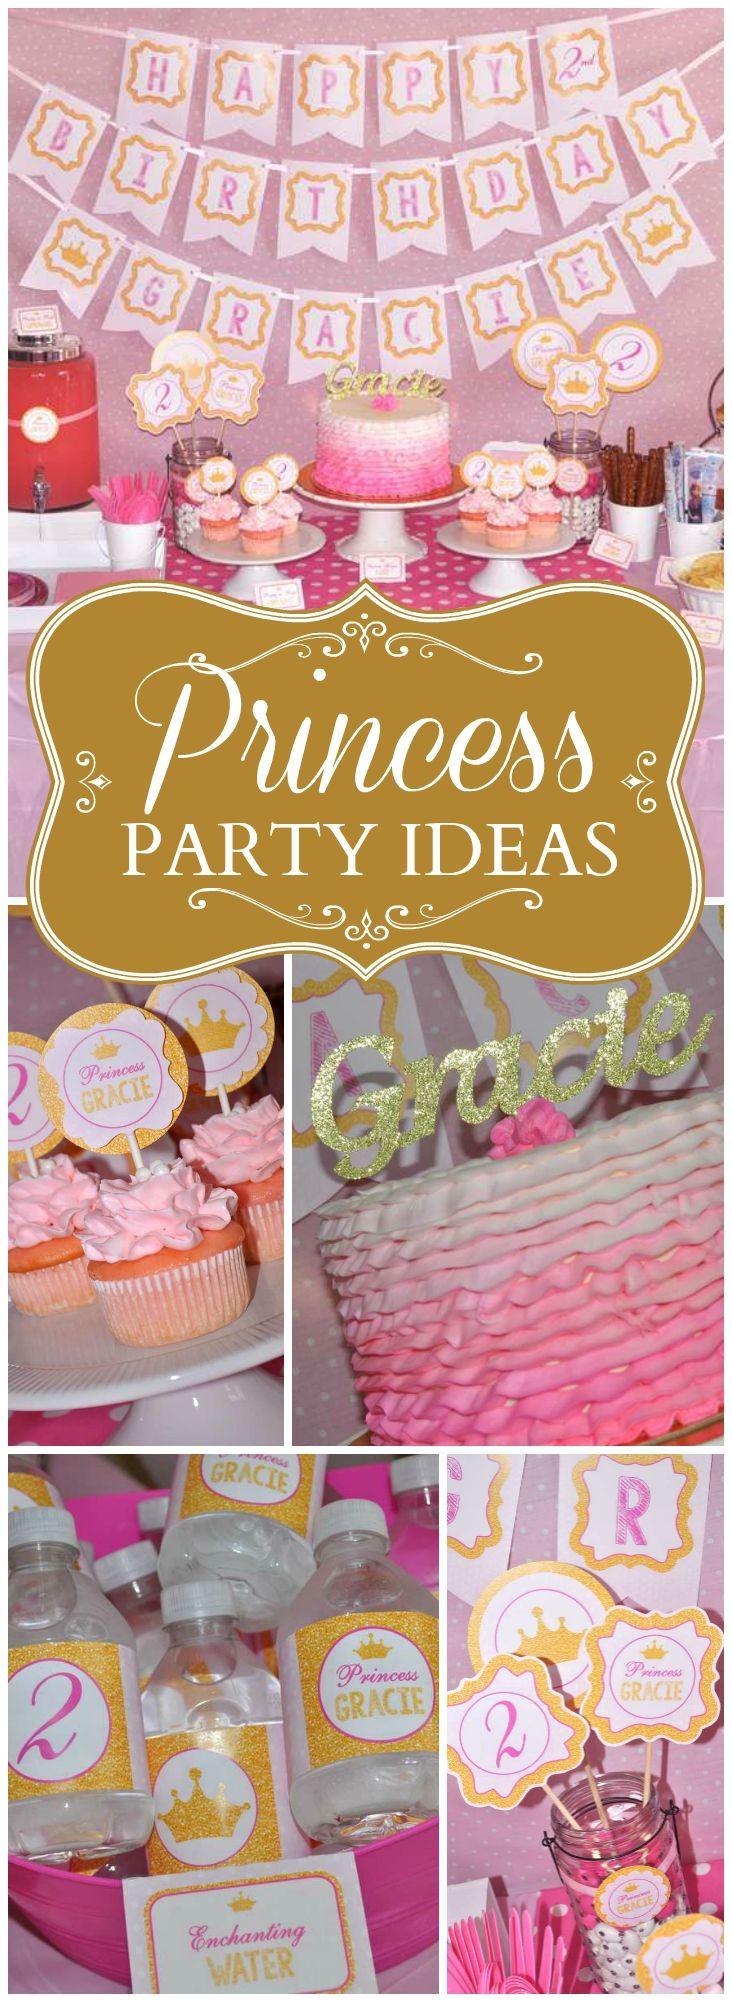 Wedding - PRINTABLES - DIY / Birthday "Princess Dress Up Party - Pink And Gold"